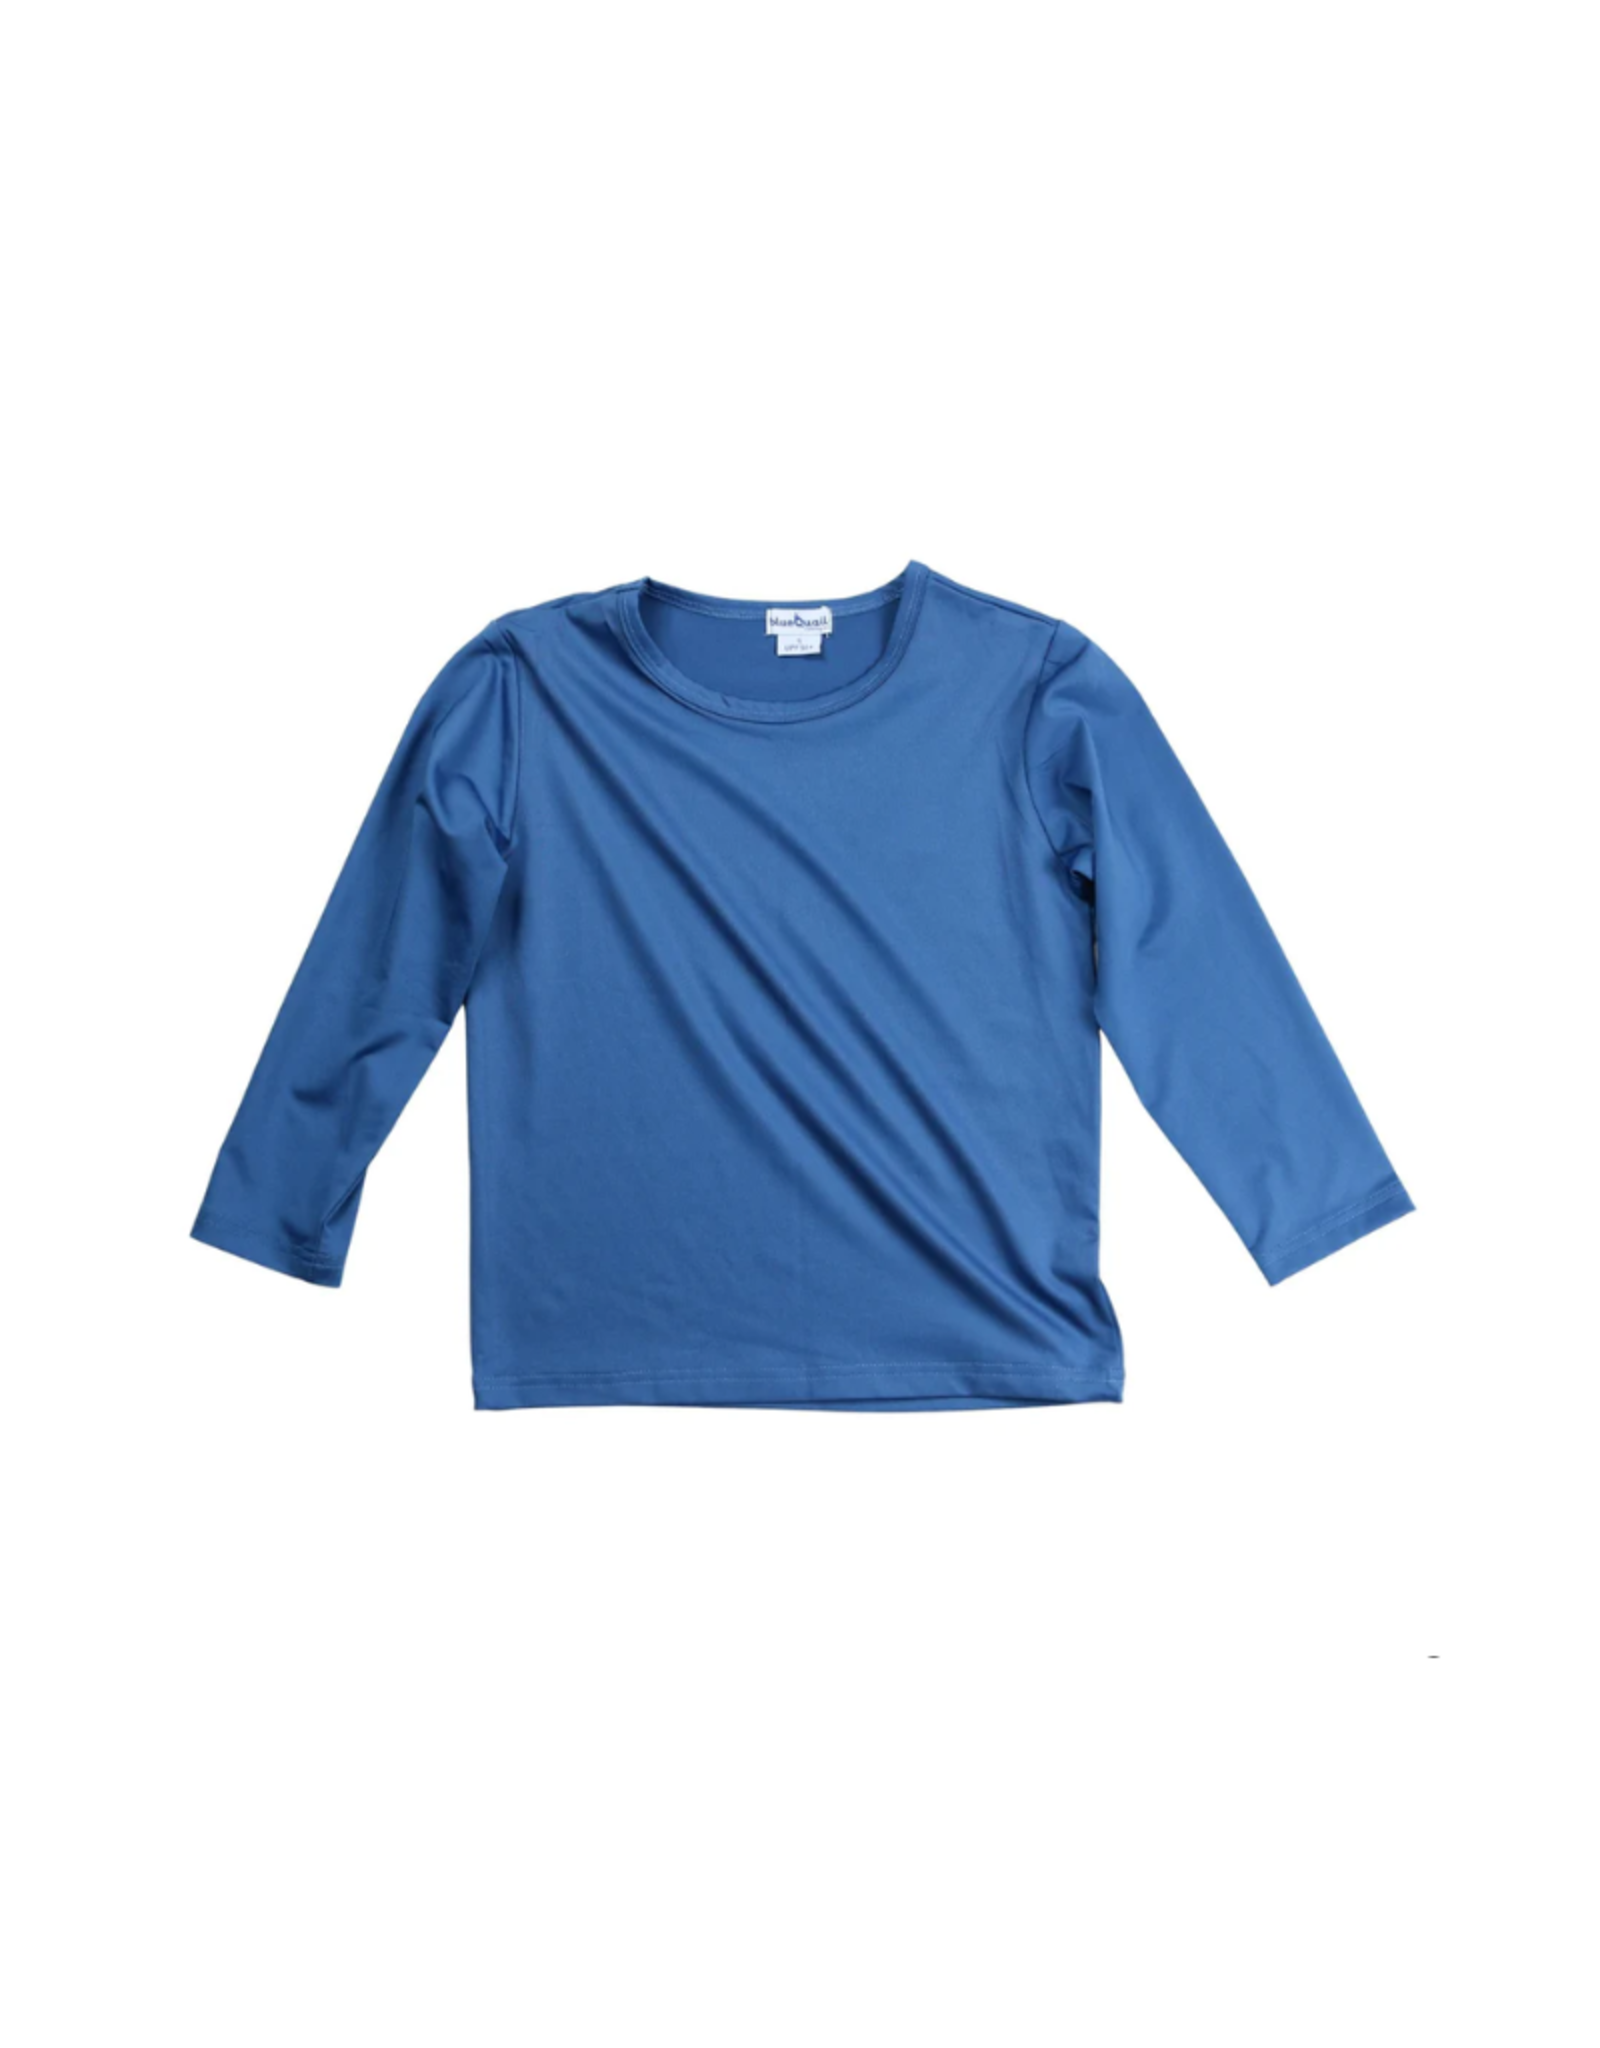 BlueQuail Clothing Co. Blue Rashguard